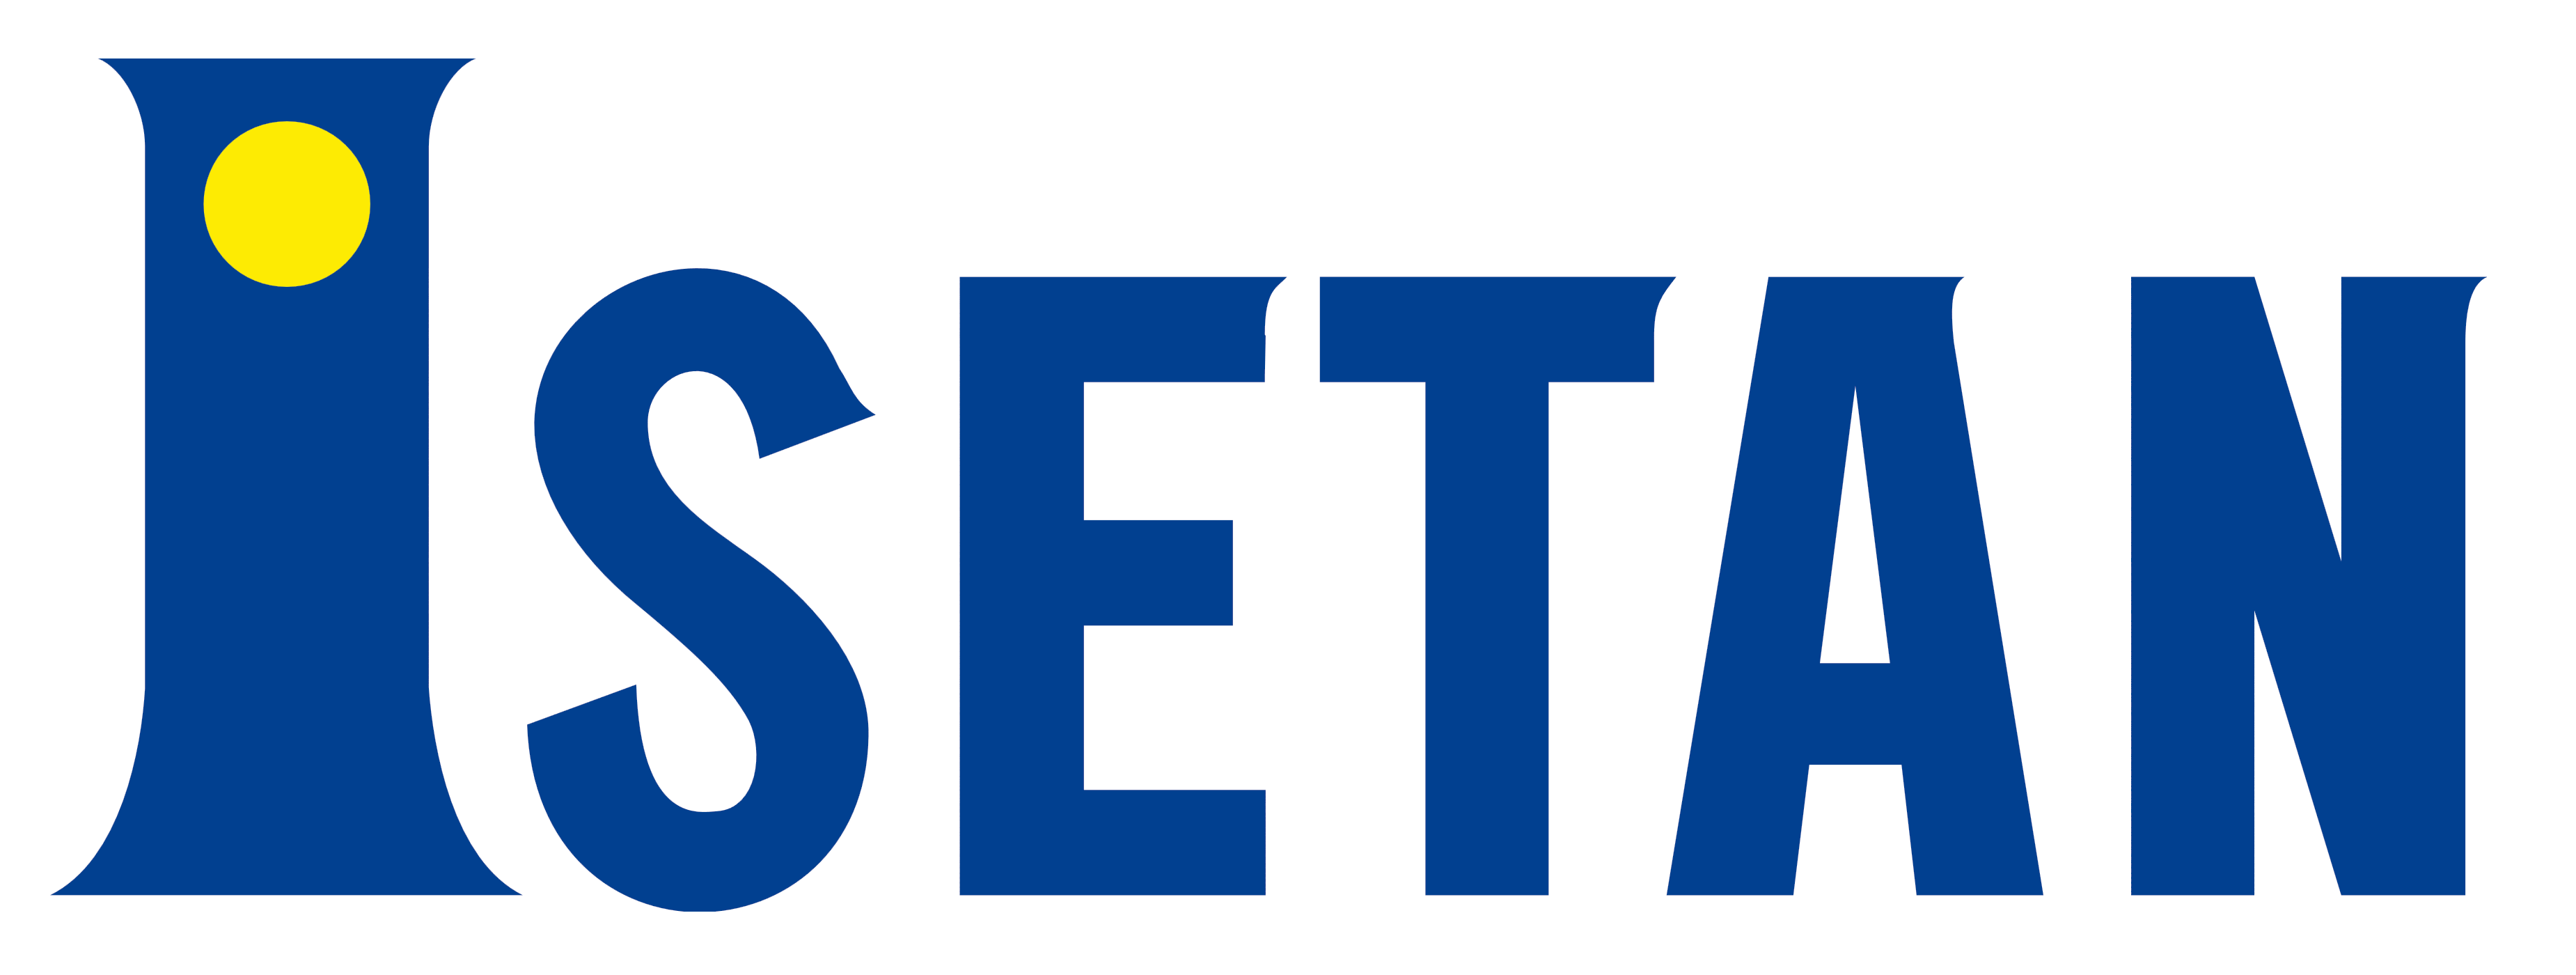 Isetan logo, logotype